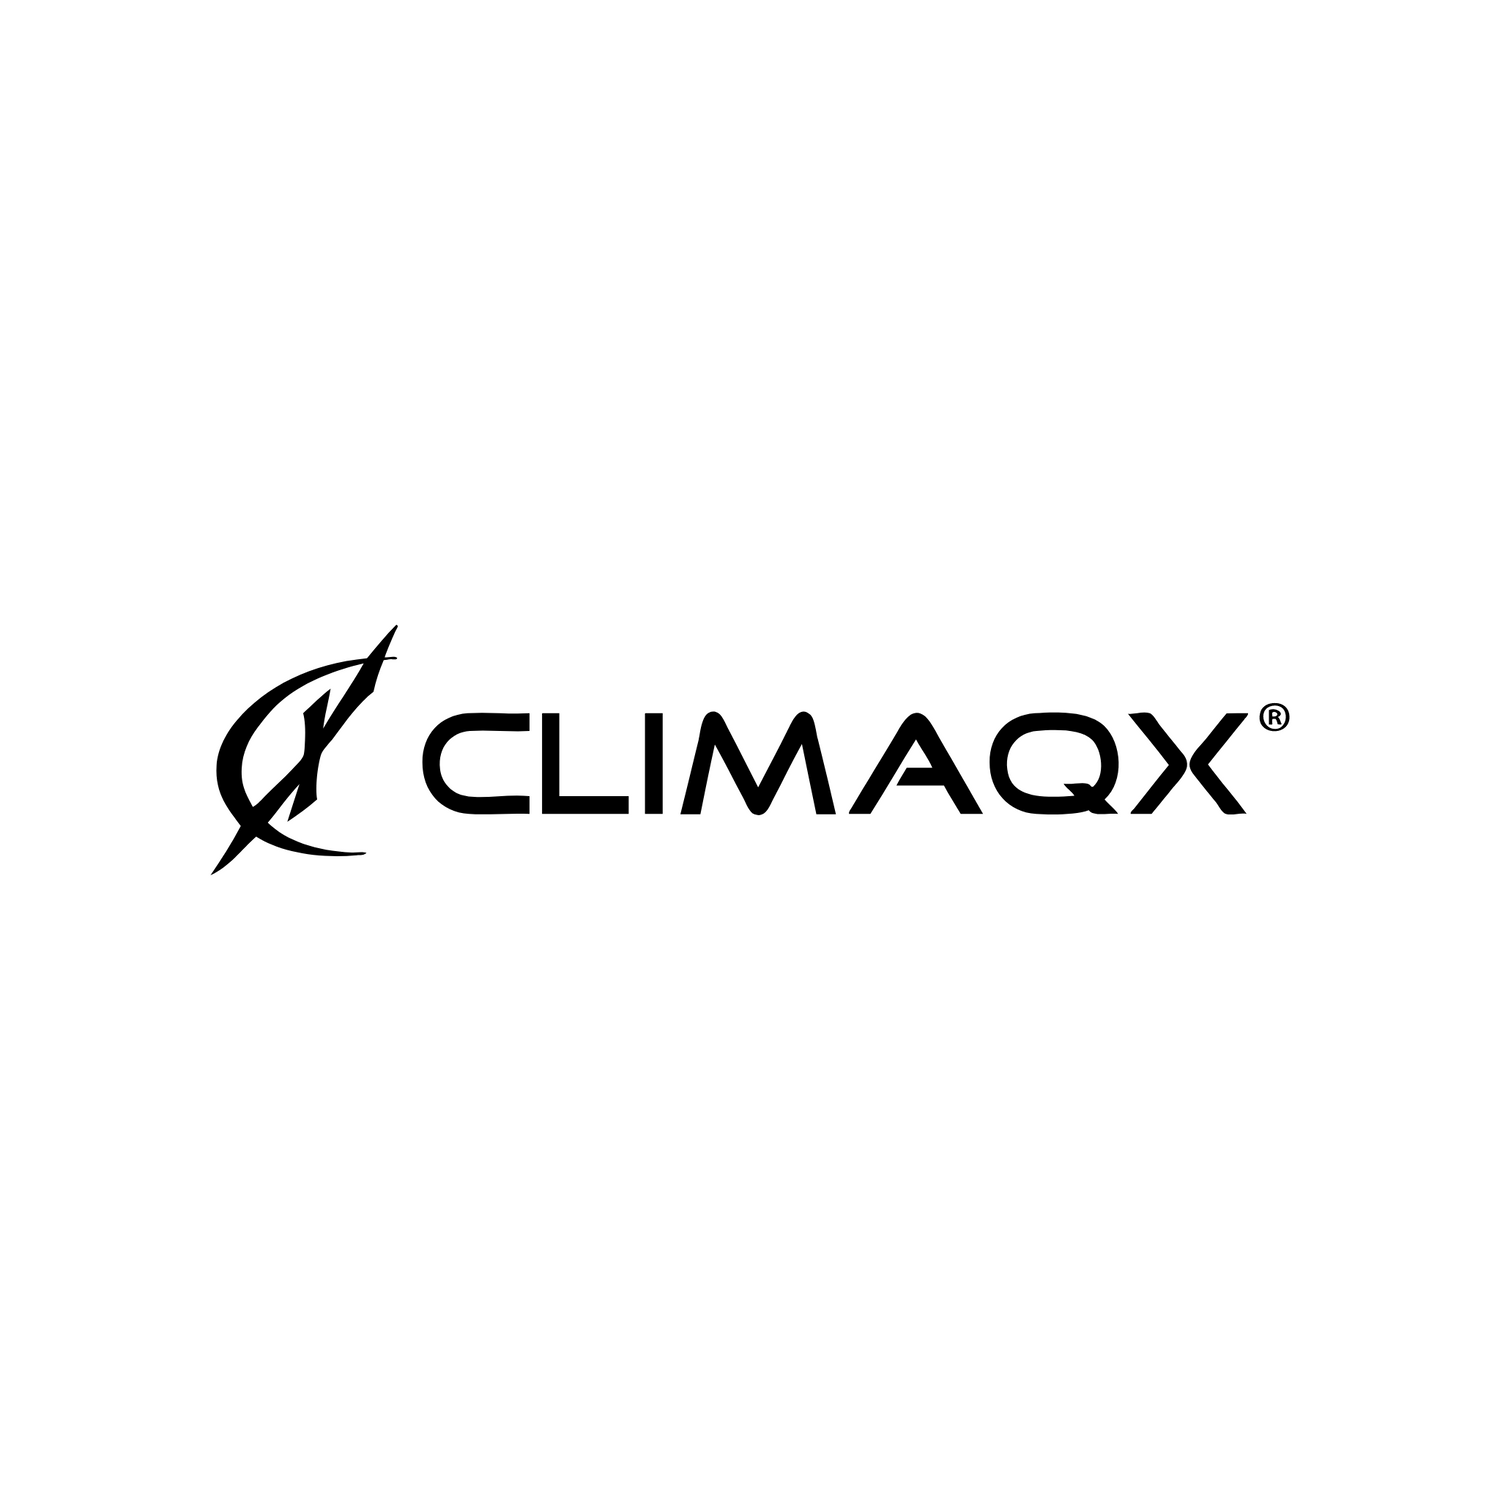 Climaqx